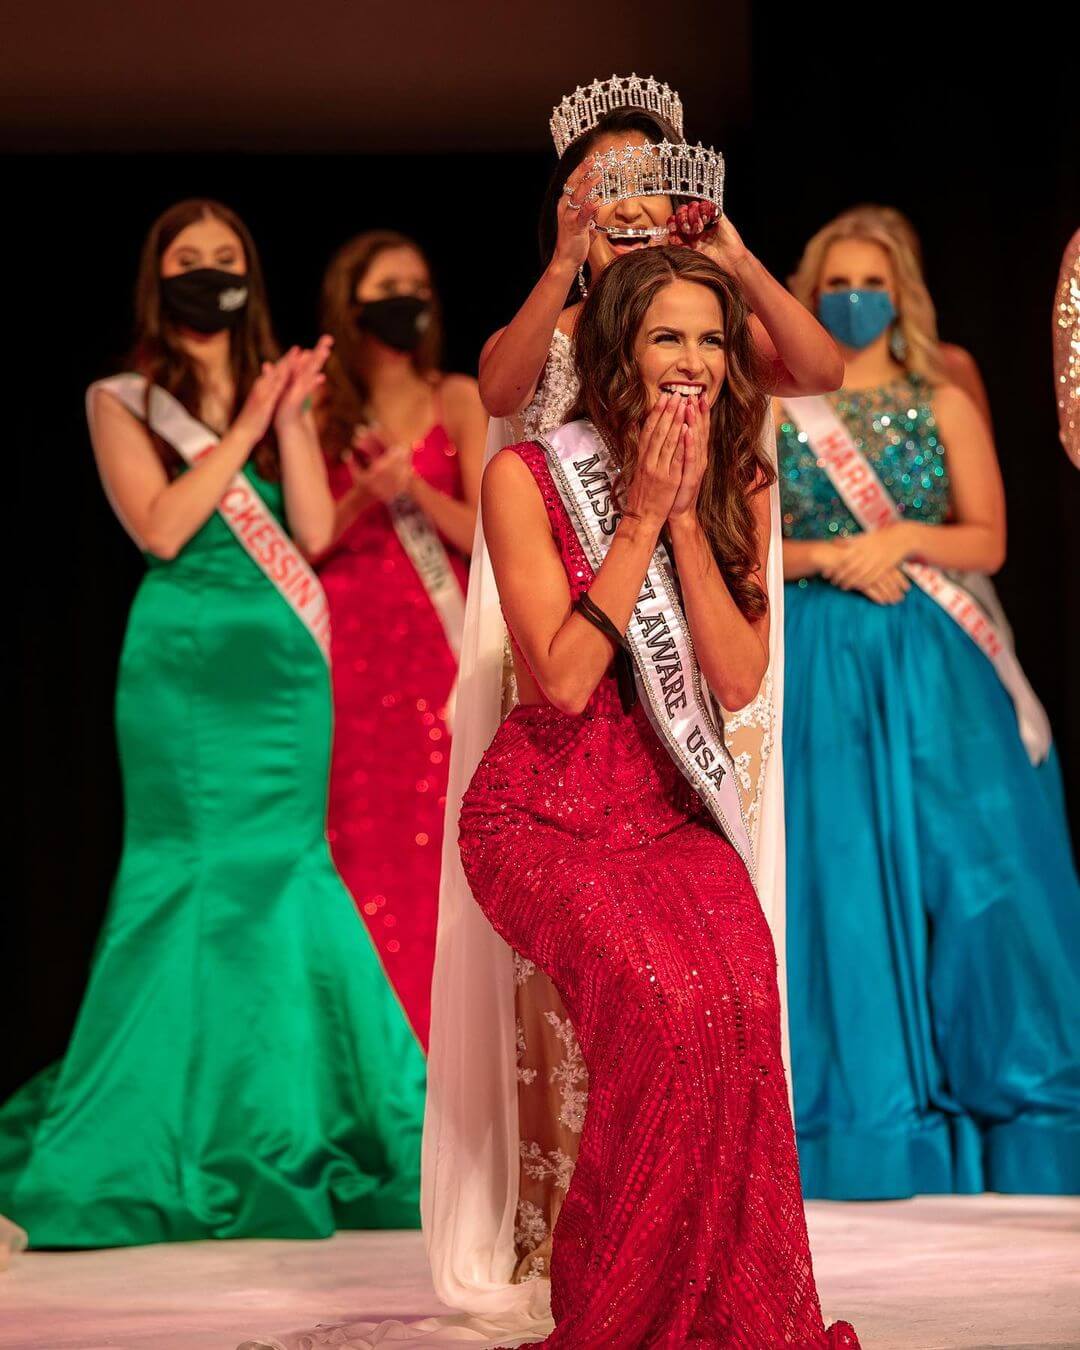 Drew Sanclemente winning Miss Delaware USA